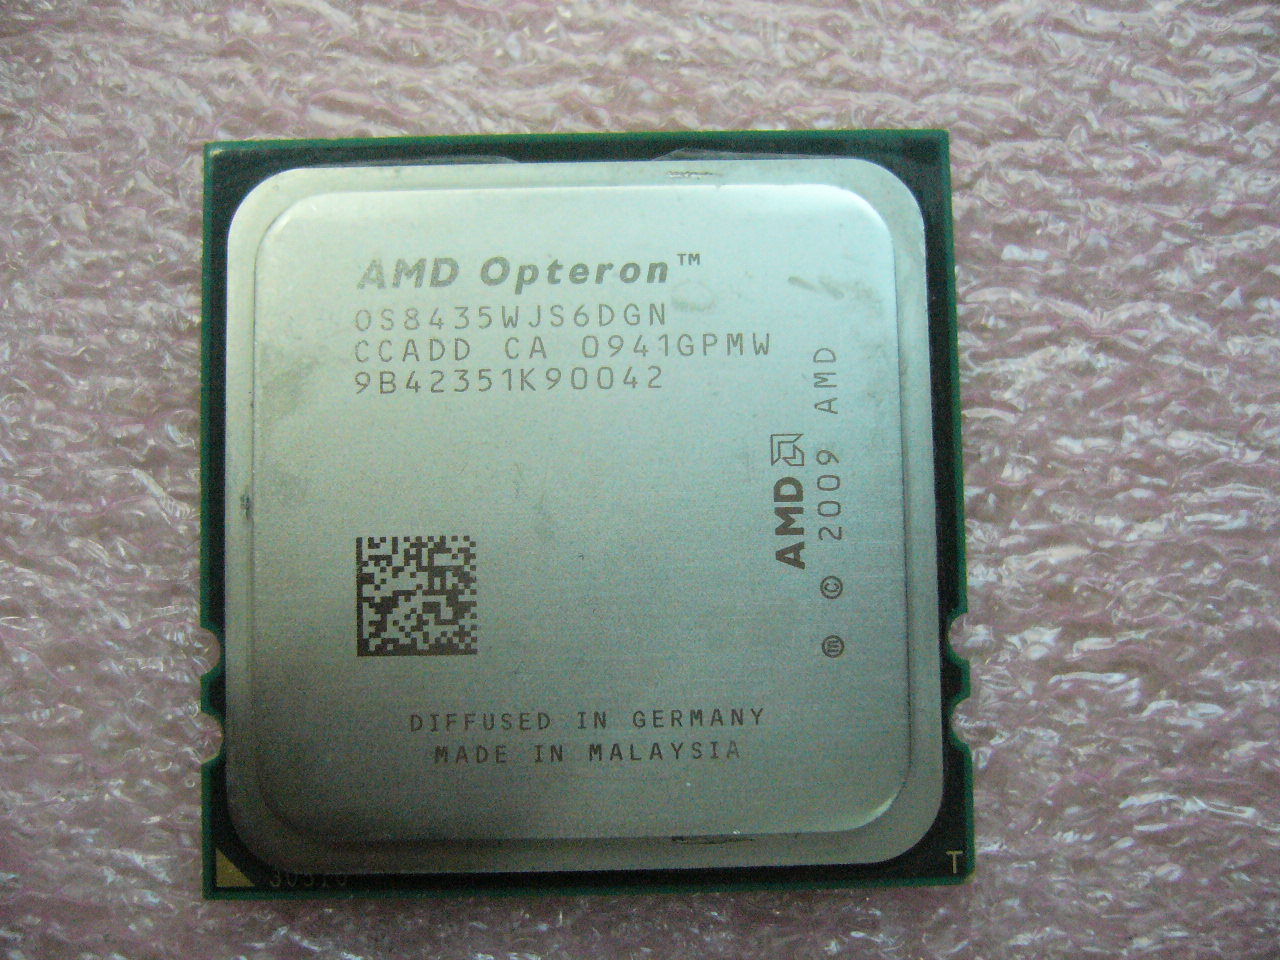 QTY 1x AMD Opteron 8435 2.6 GHz Six Core (OS8435WJS6DGN) CPU Socket F 1207